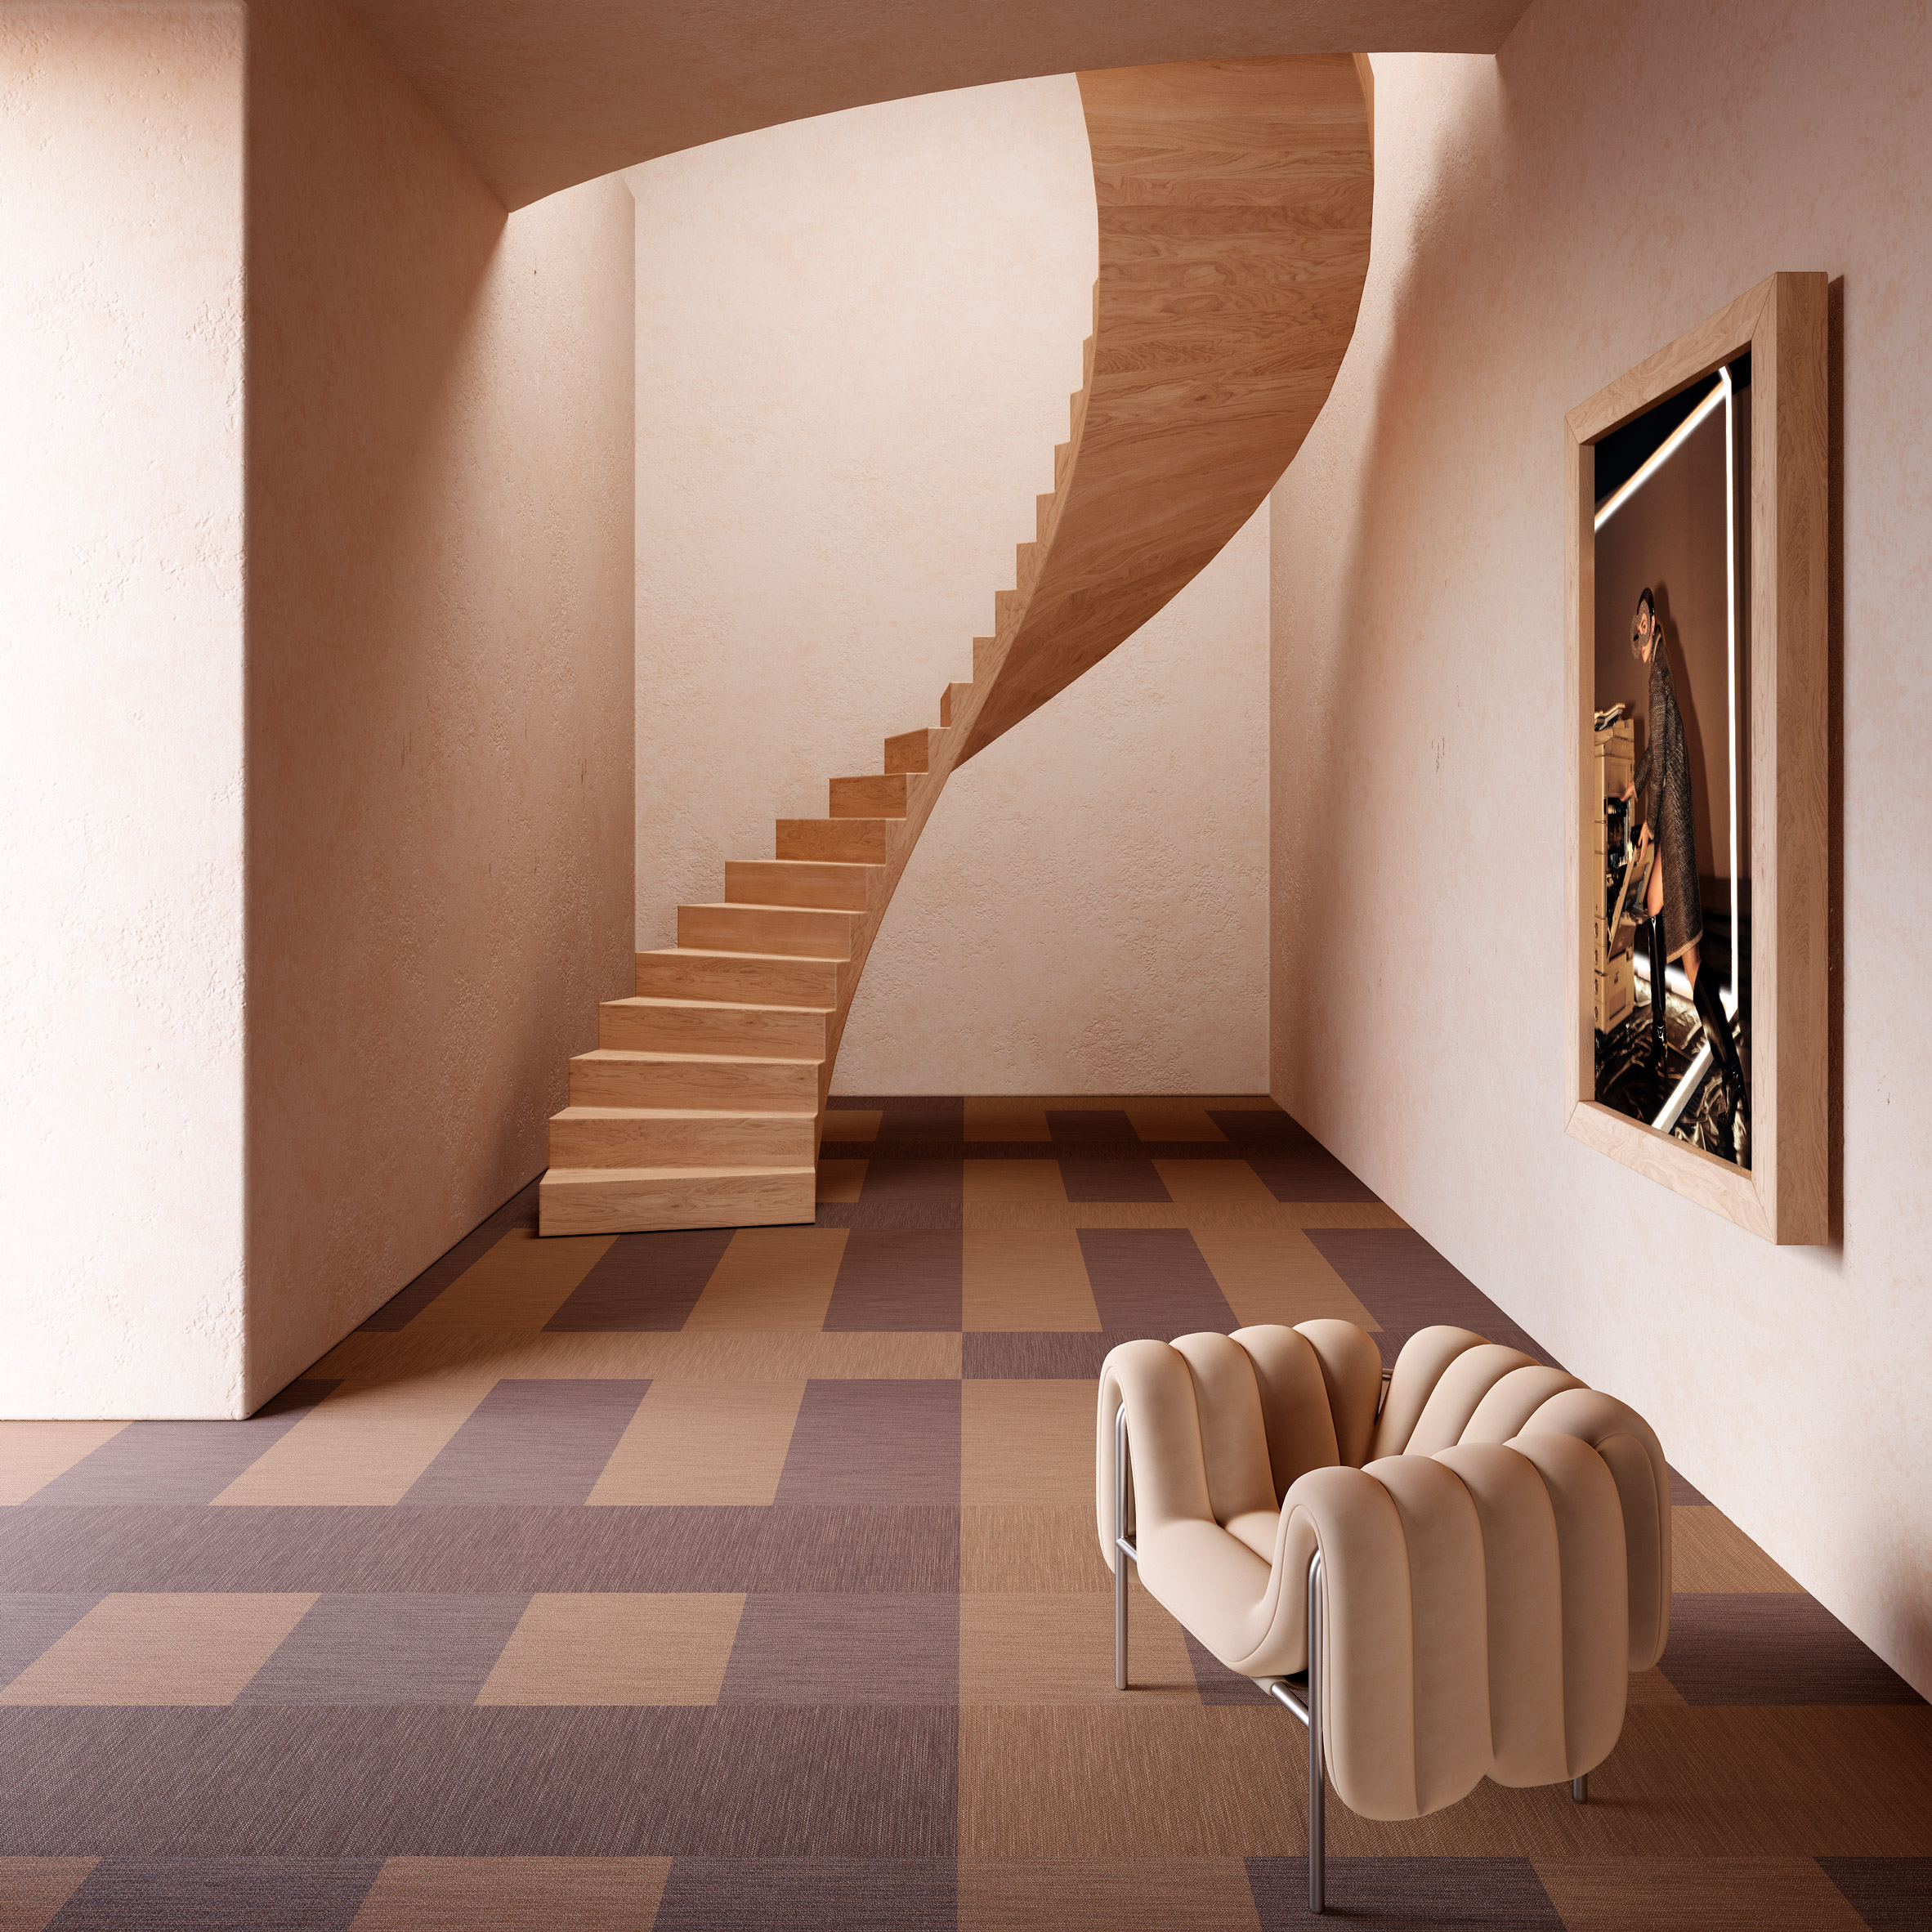 Emerge flooring tiles by Bolon